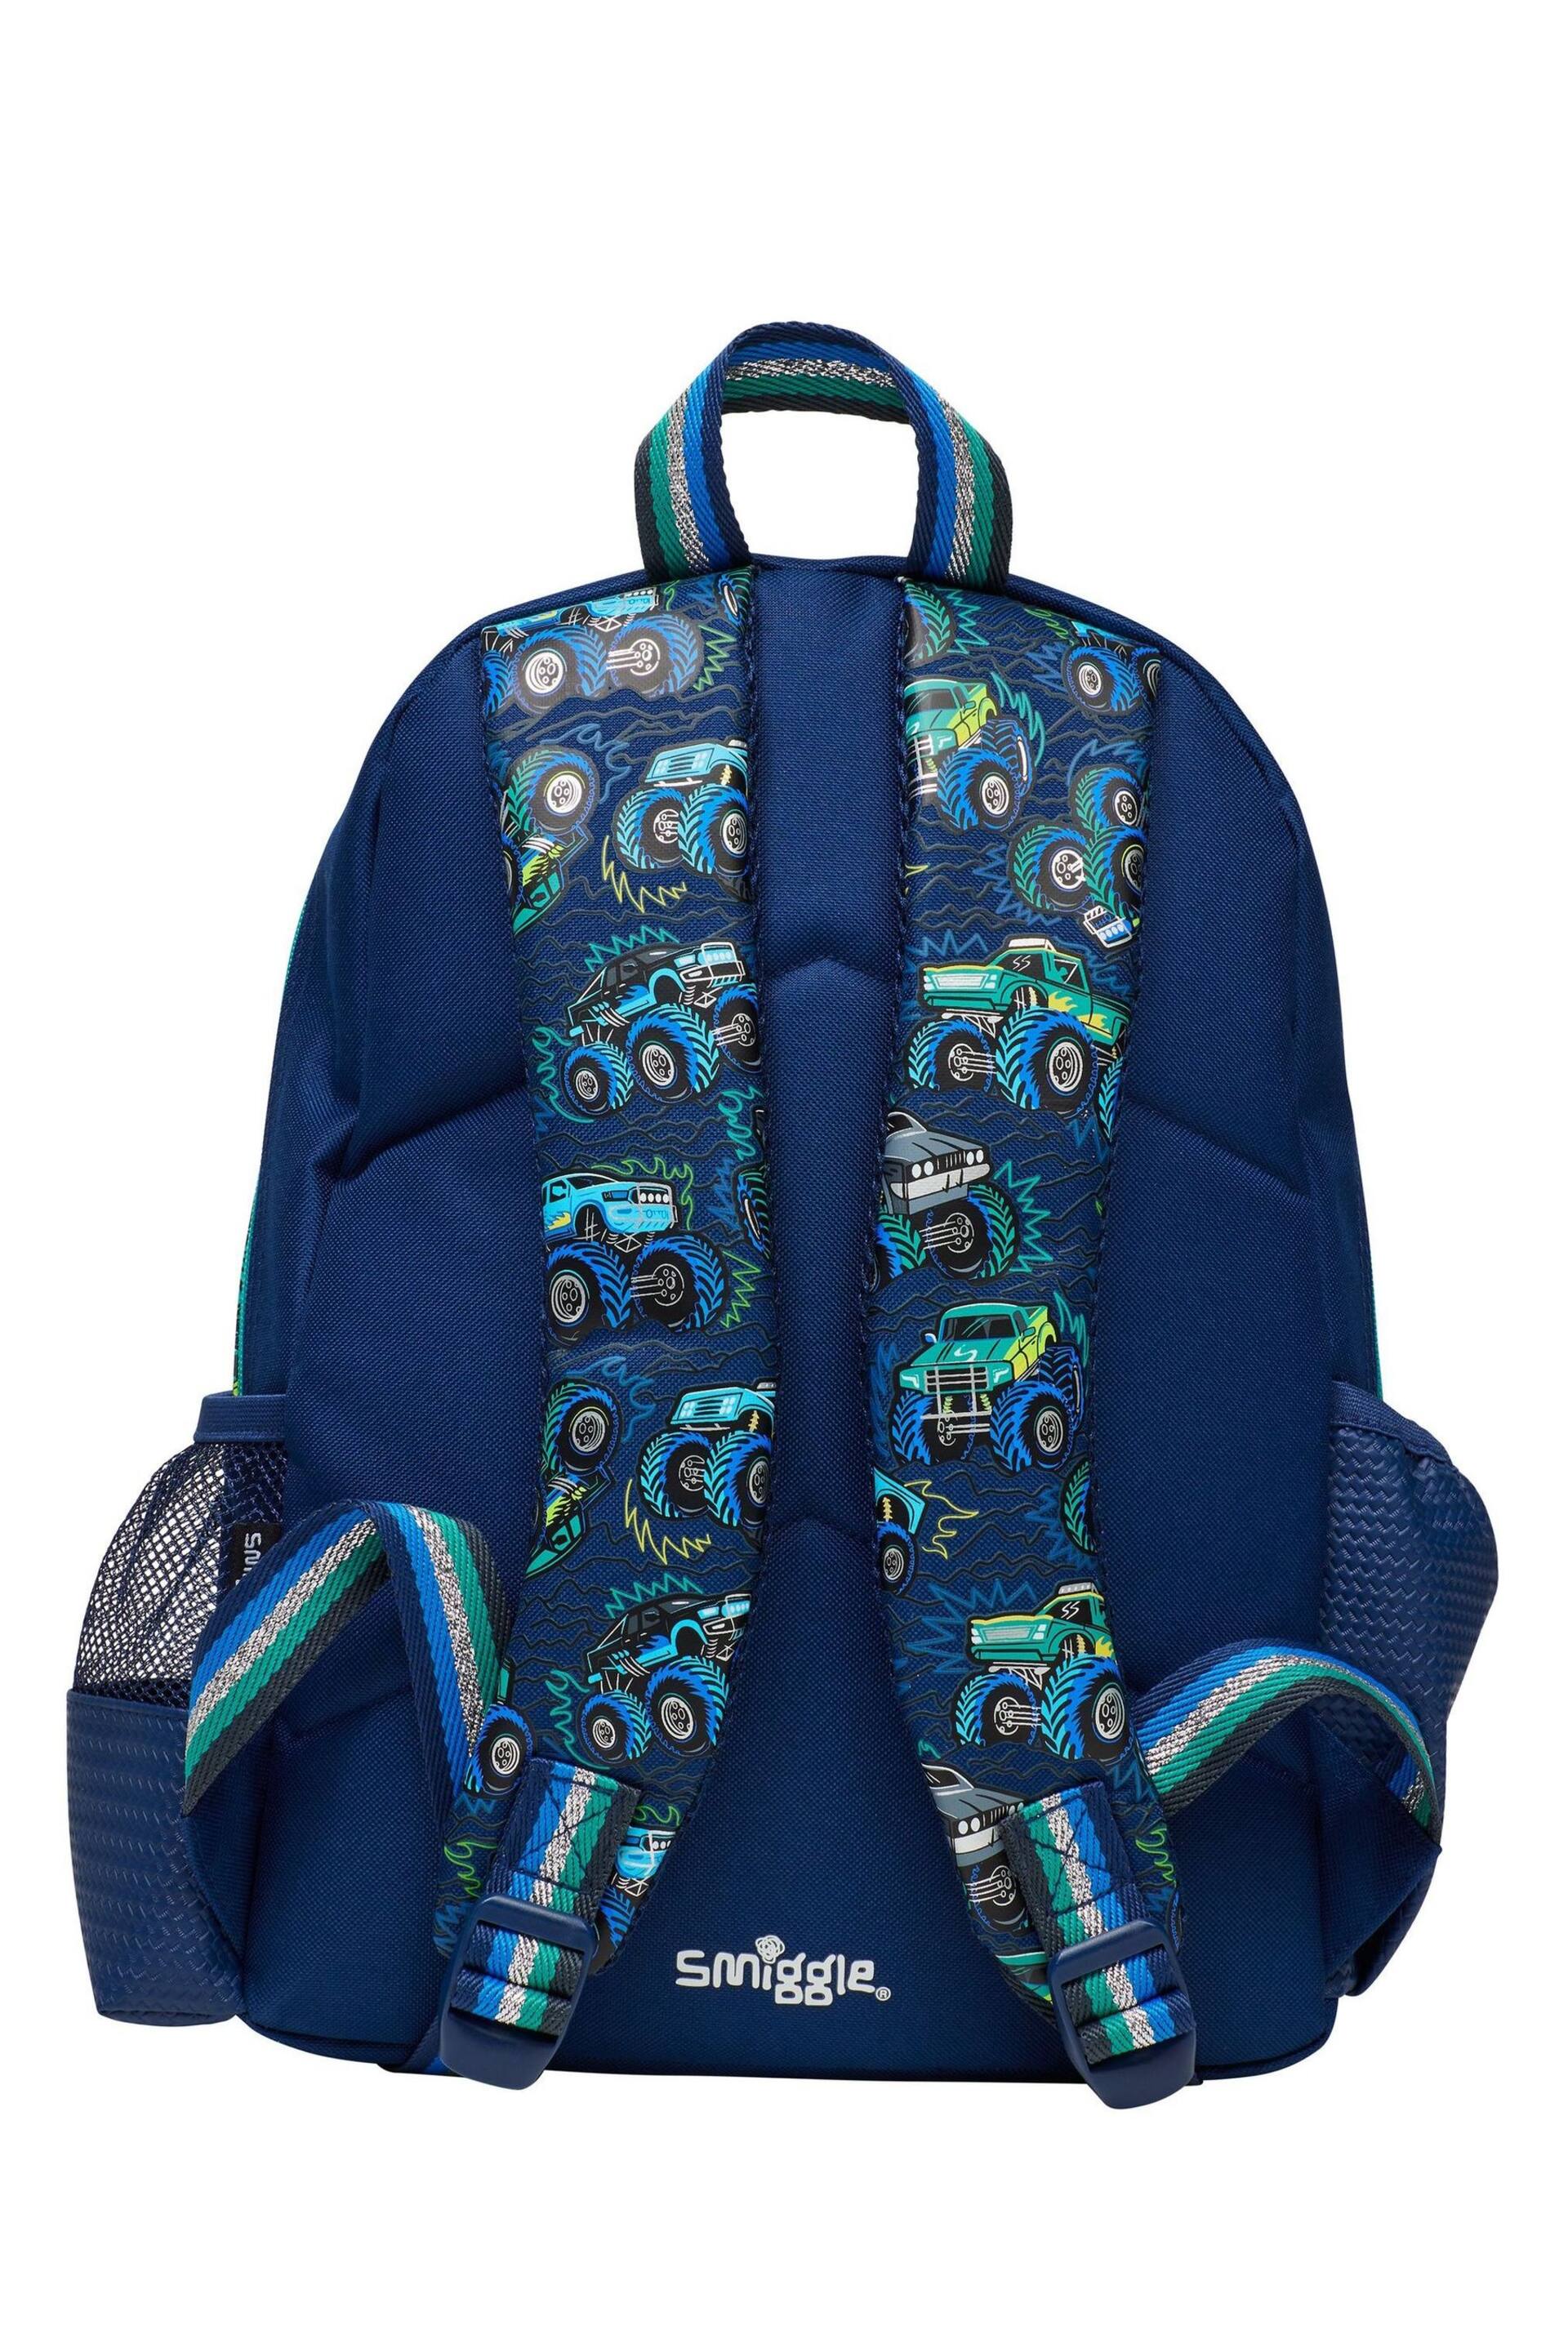 Smiggle Blue Blast Off Junior Id Backpack - Image 3 of 5